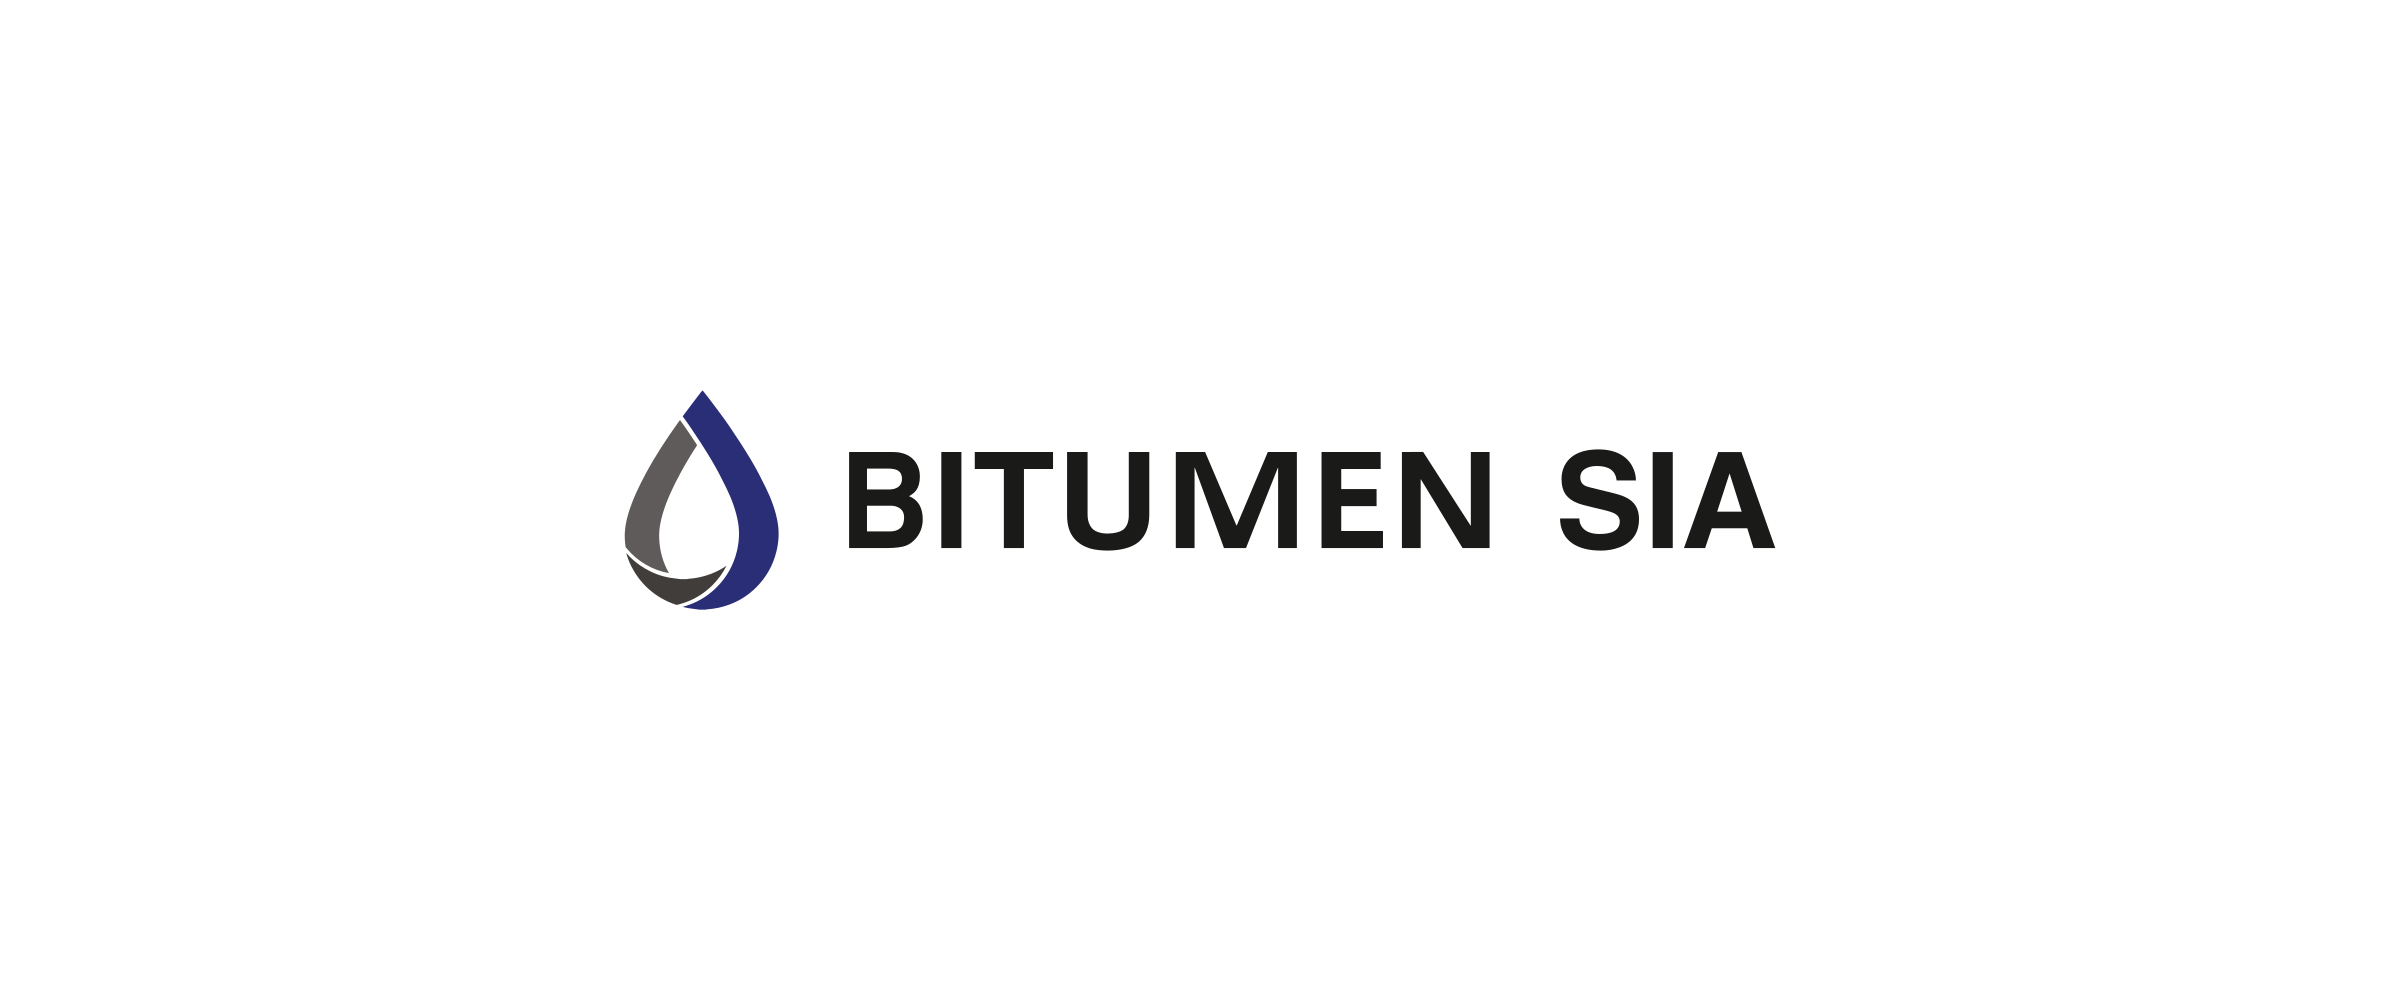 BITUMEN SIA - bitumen materials